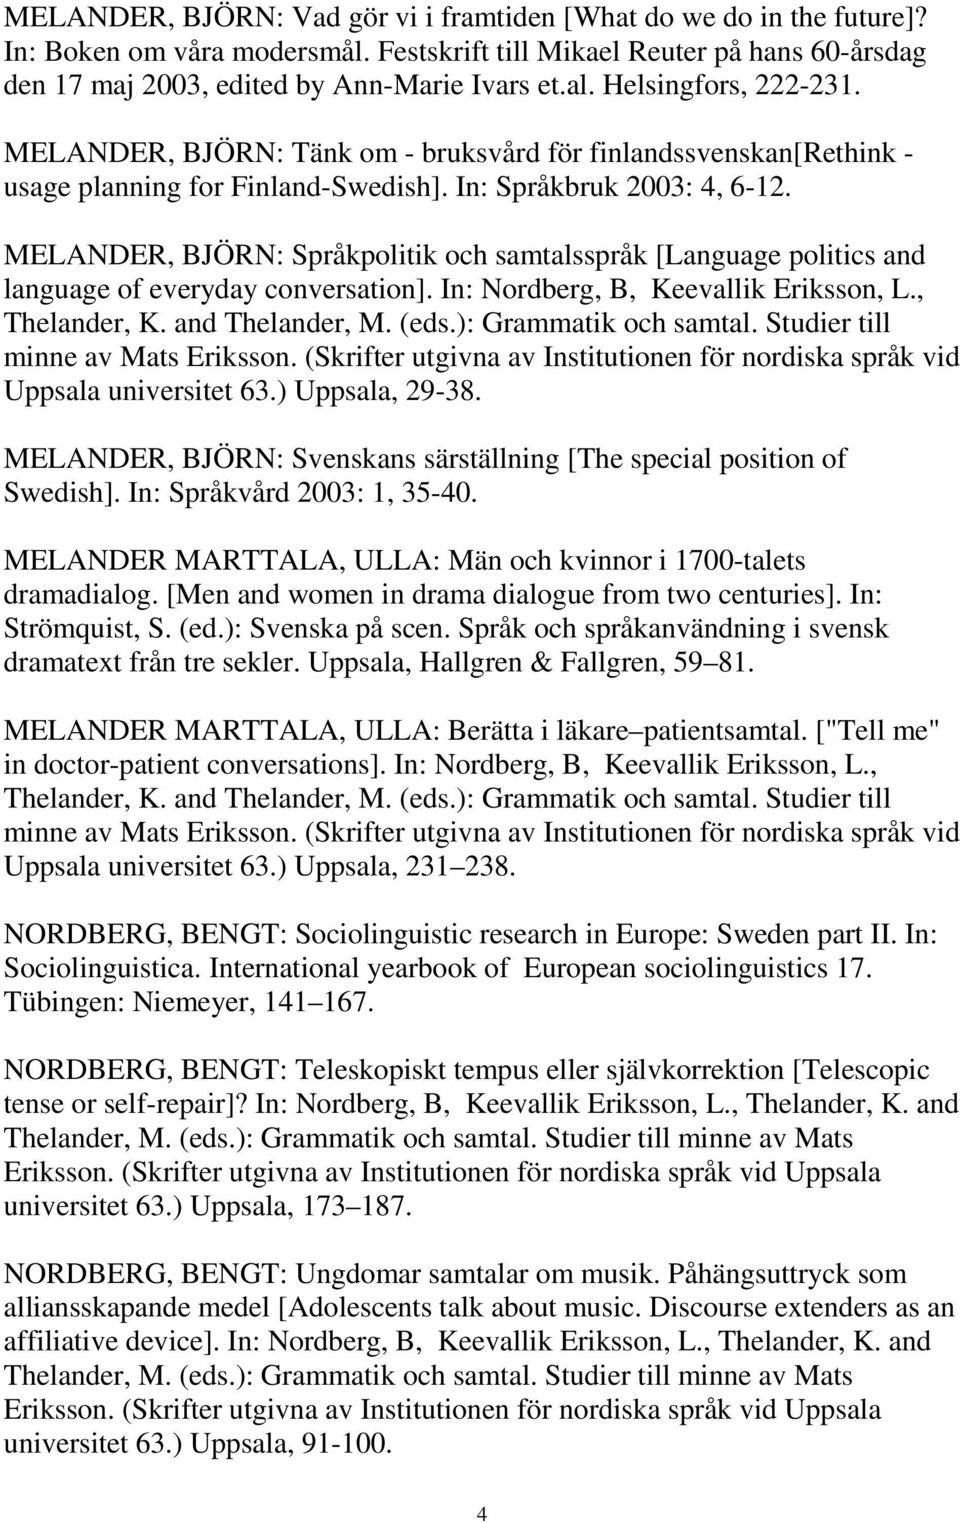 MELANDER, BJÖRN: Språkpolitik och samtalsspråk [Language politics and language of everyday conversation]. In: Nordberg, B, Keevallik Eriksson, L., Thelander, K. and Thelander, M. (eds.